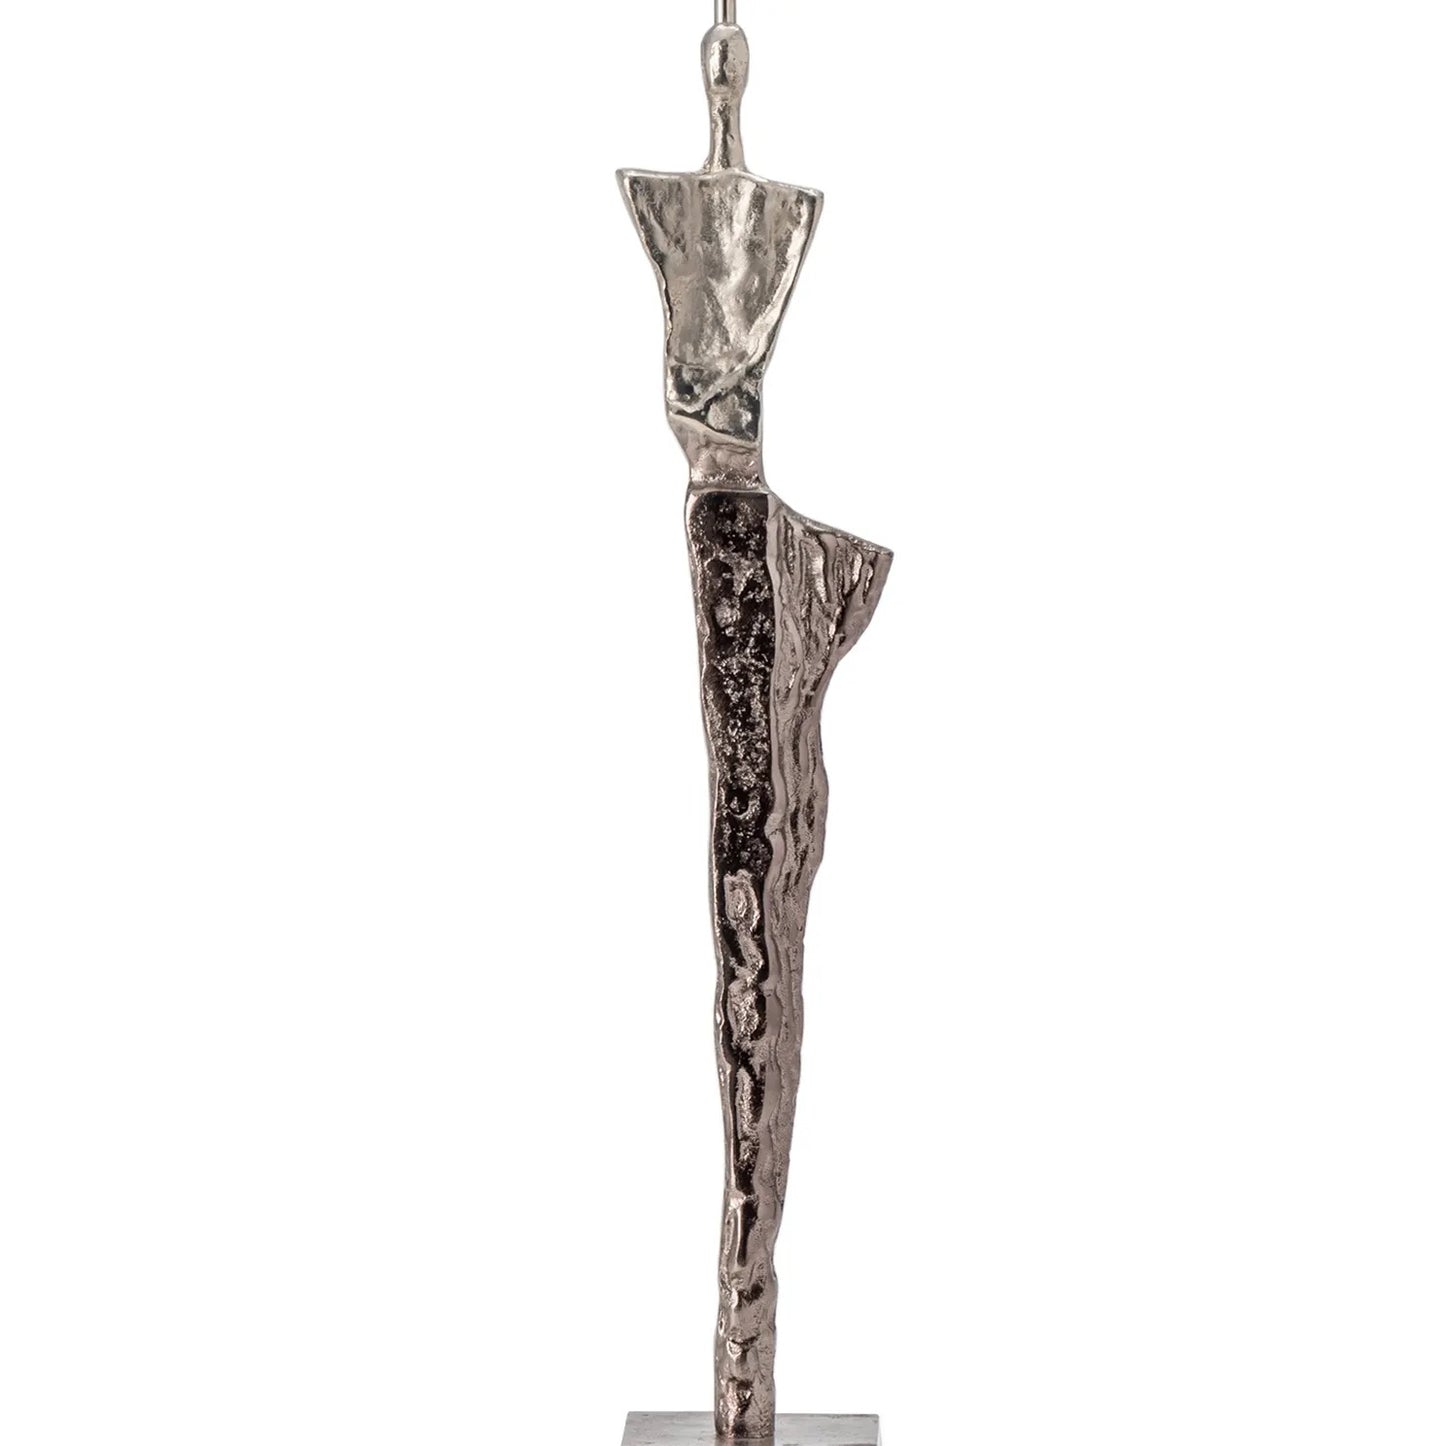 Giacometti Sculptural Buffet Lamp